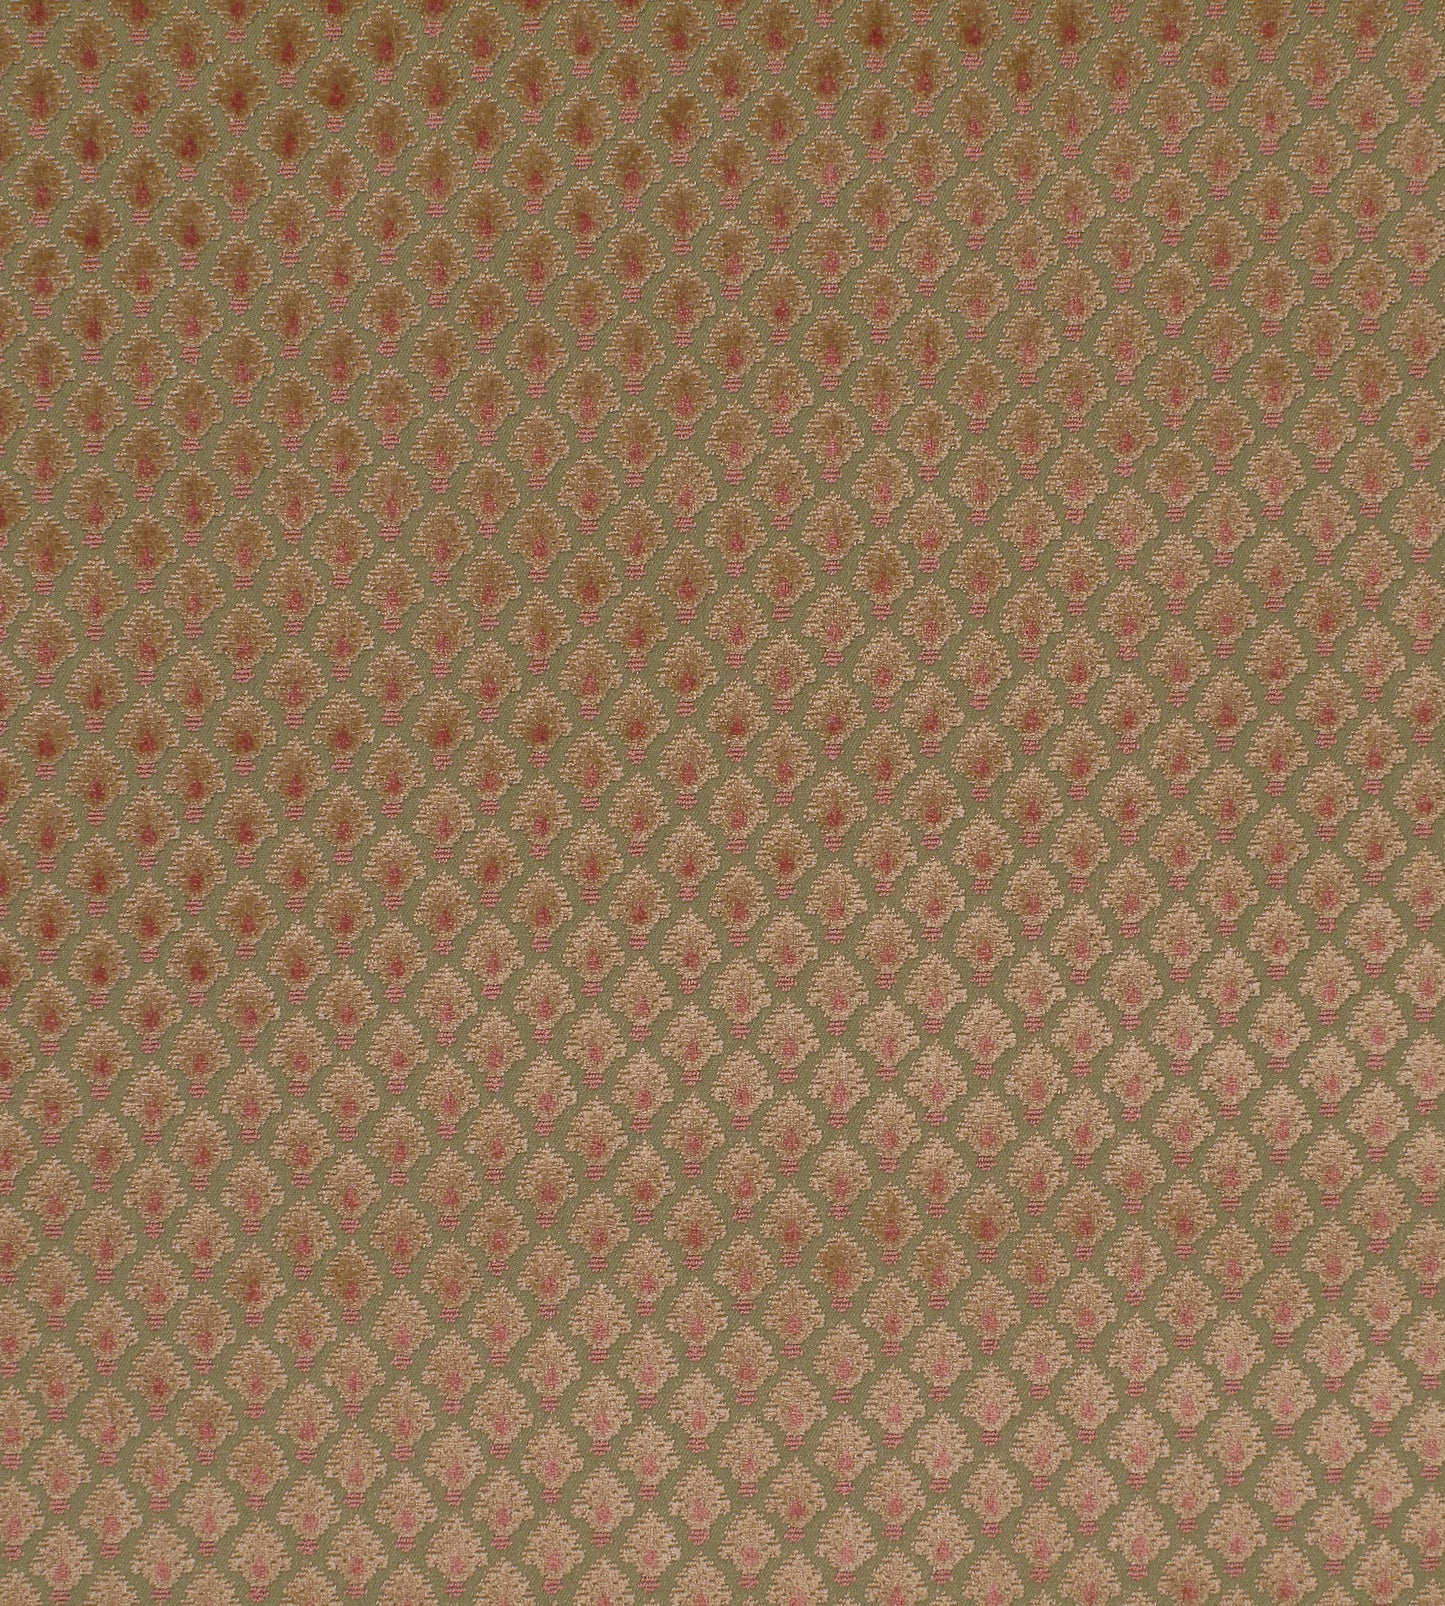 Purchase Old World Weavers Fabric Pattern GG 32006200, Verrier Rose Beige 1